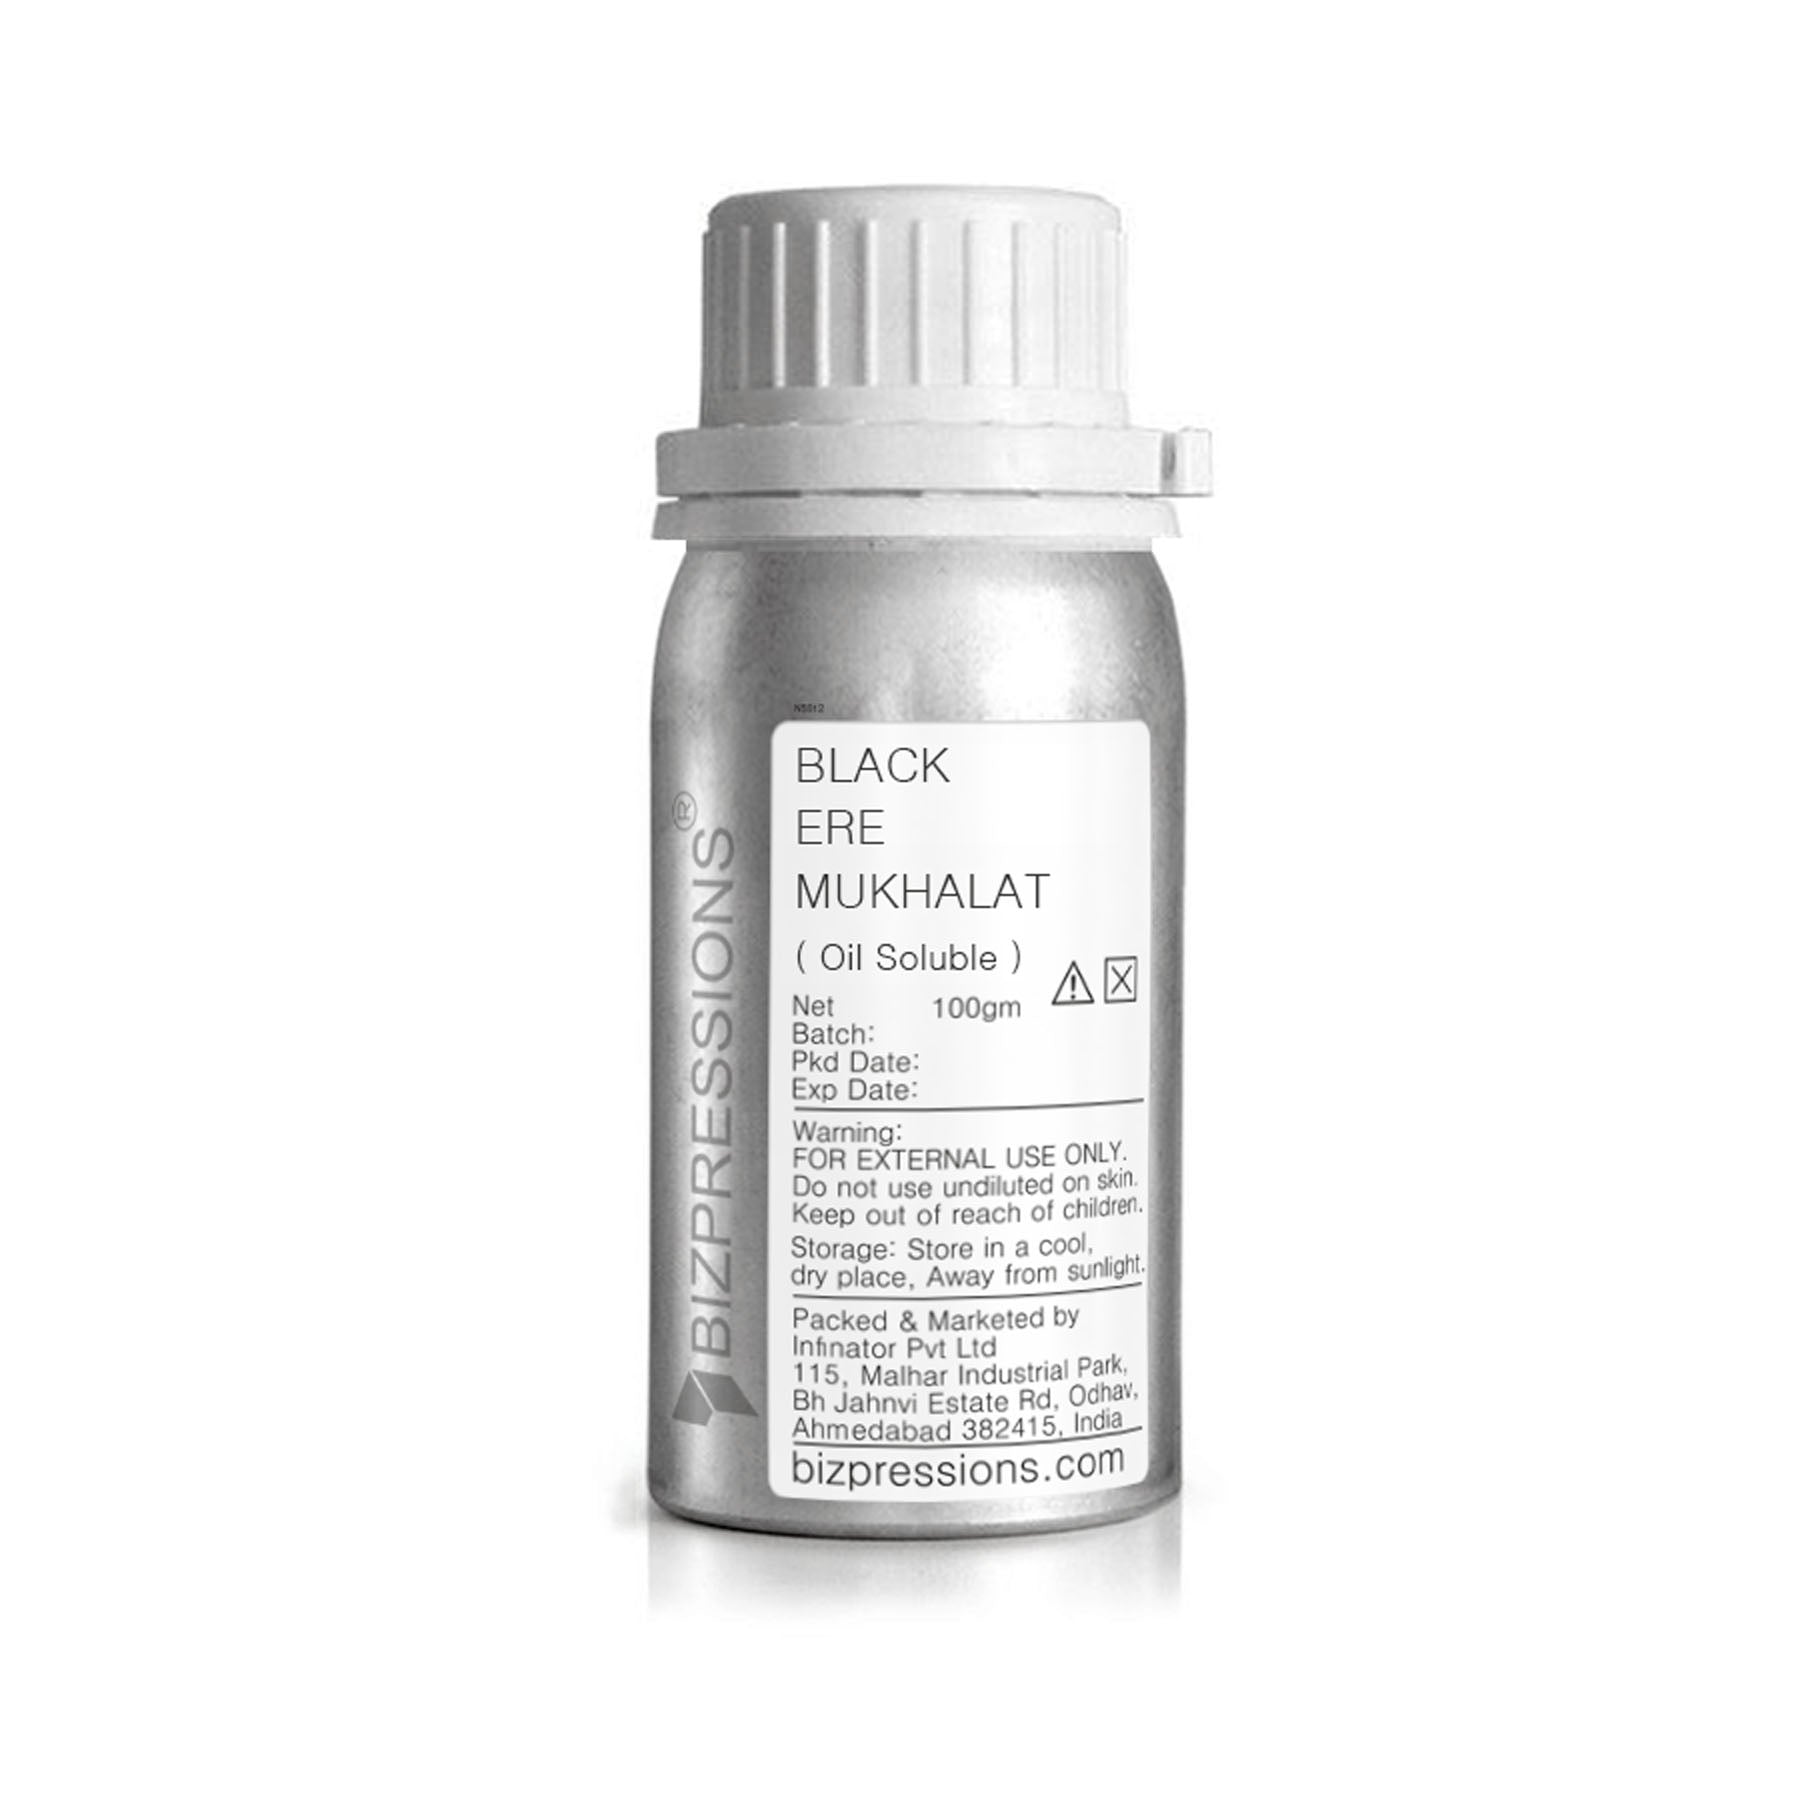 BLACK CASHMERE MUKHALAT - Fragrance ( Oil Soluble ) - 100 gm